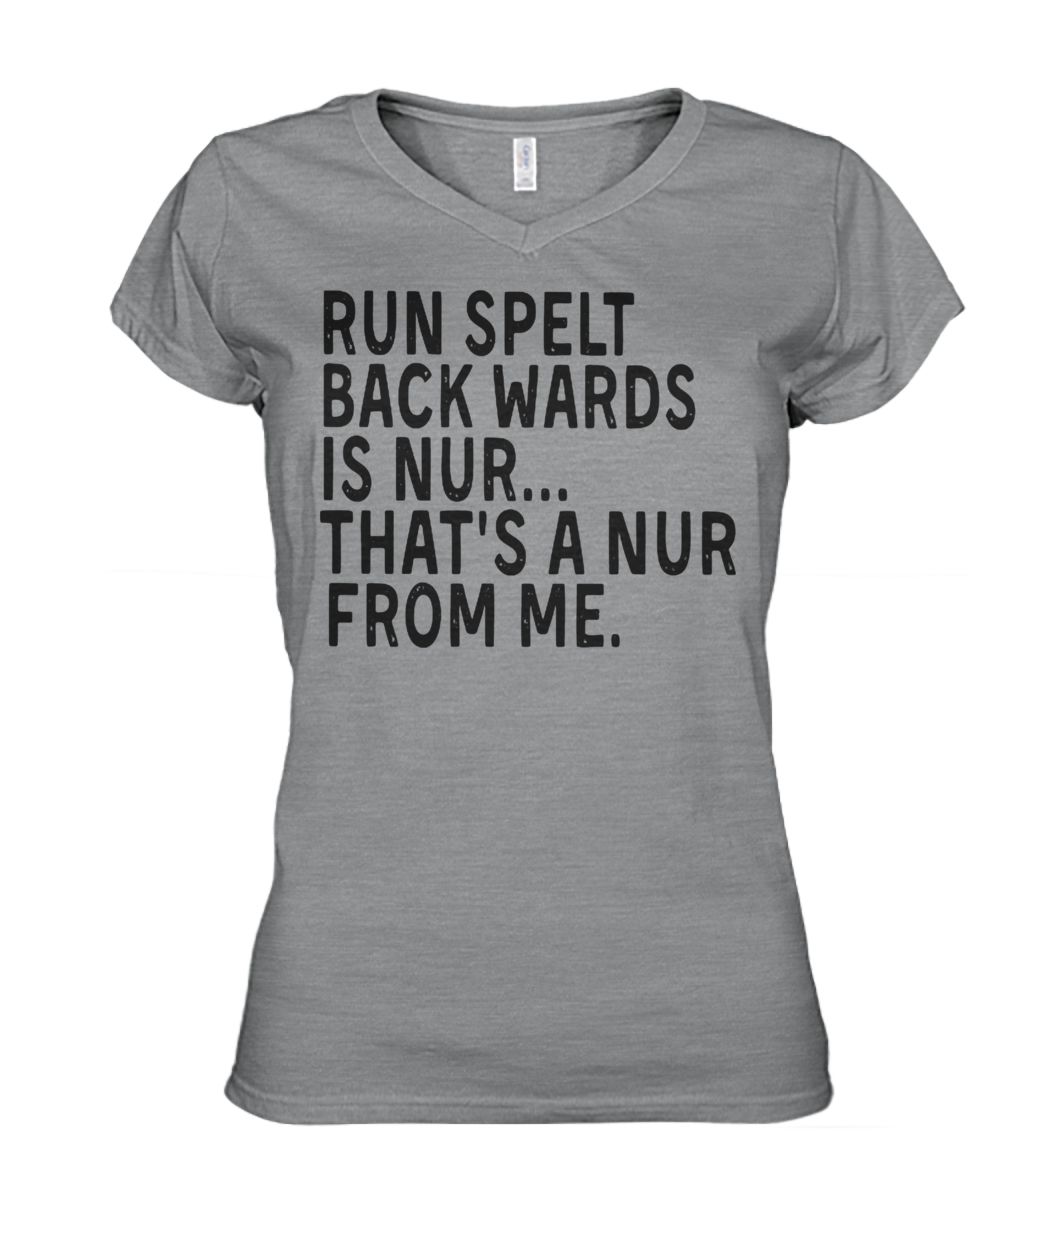 Run spelt backwards is nur that's a nur from me women's v-neck